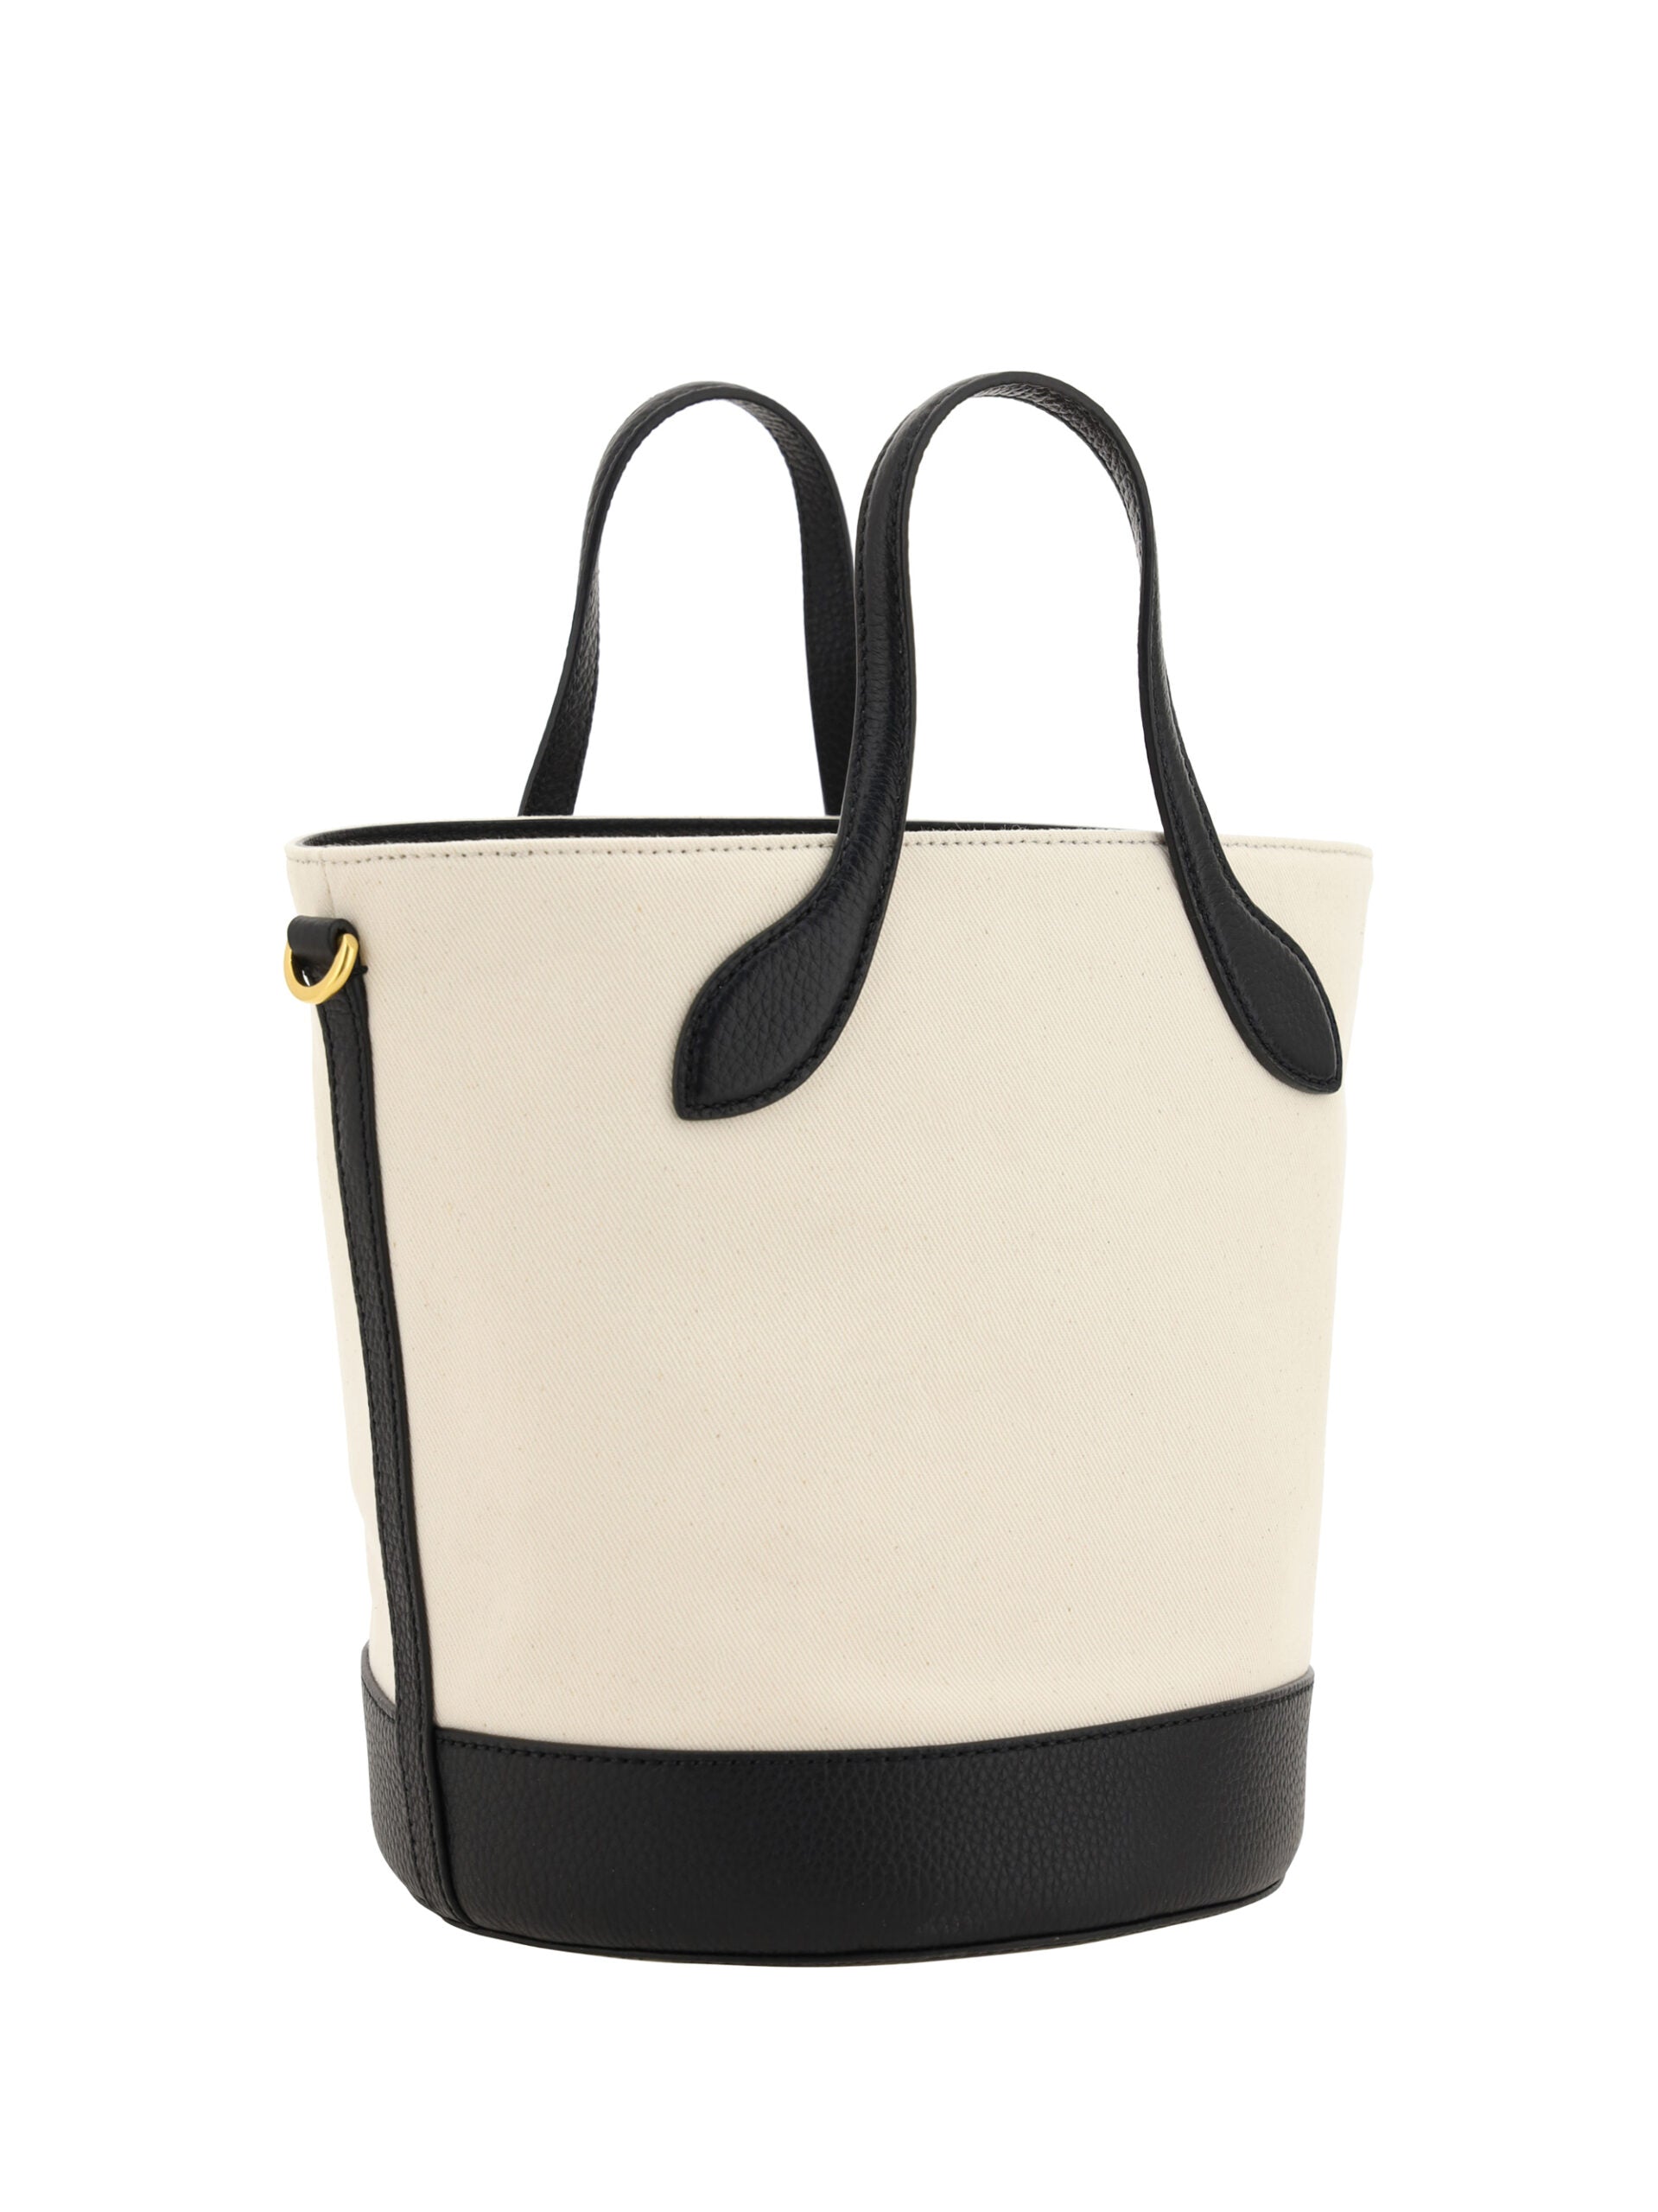 Fashionsarah.com Fashionsarah.com Bally White and Black Leather Bucket Bag